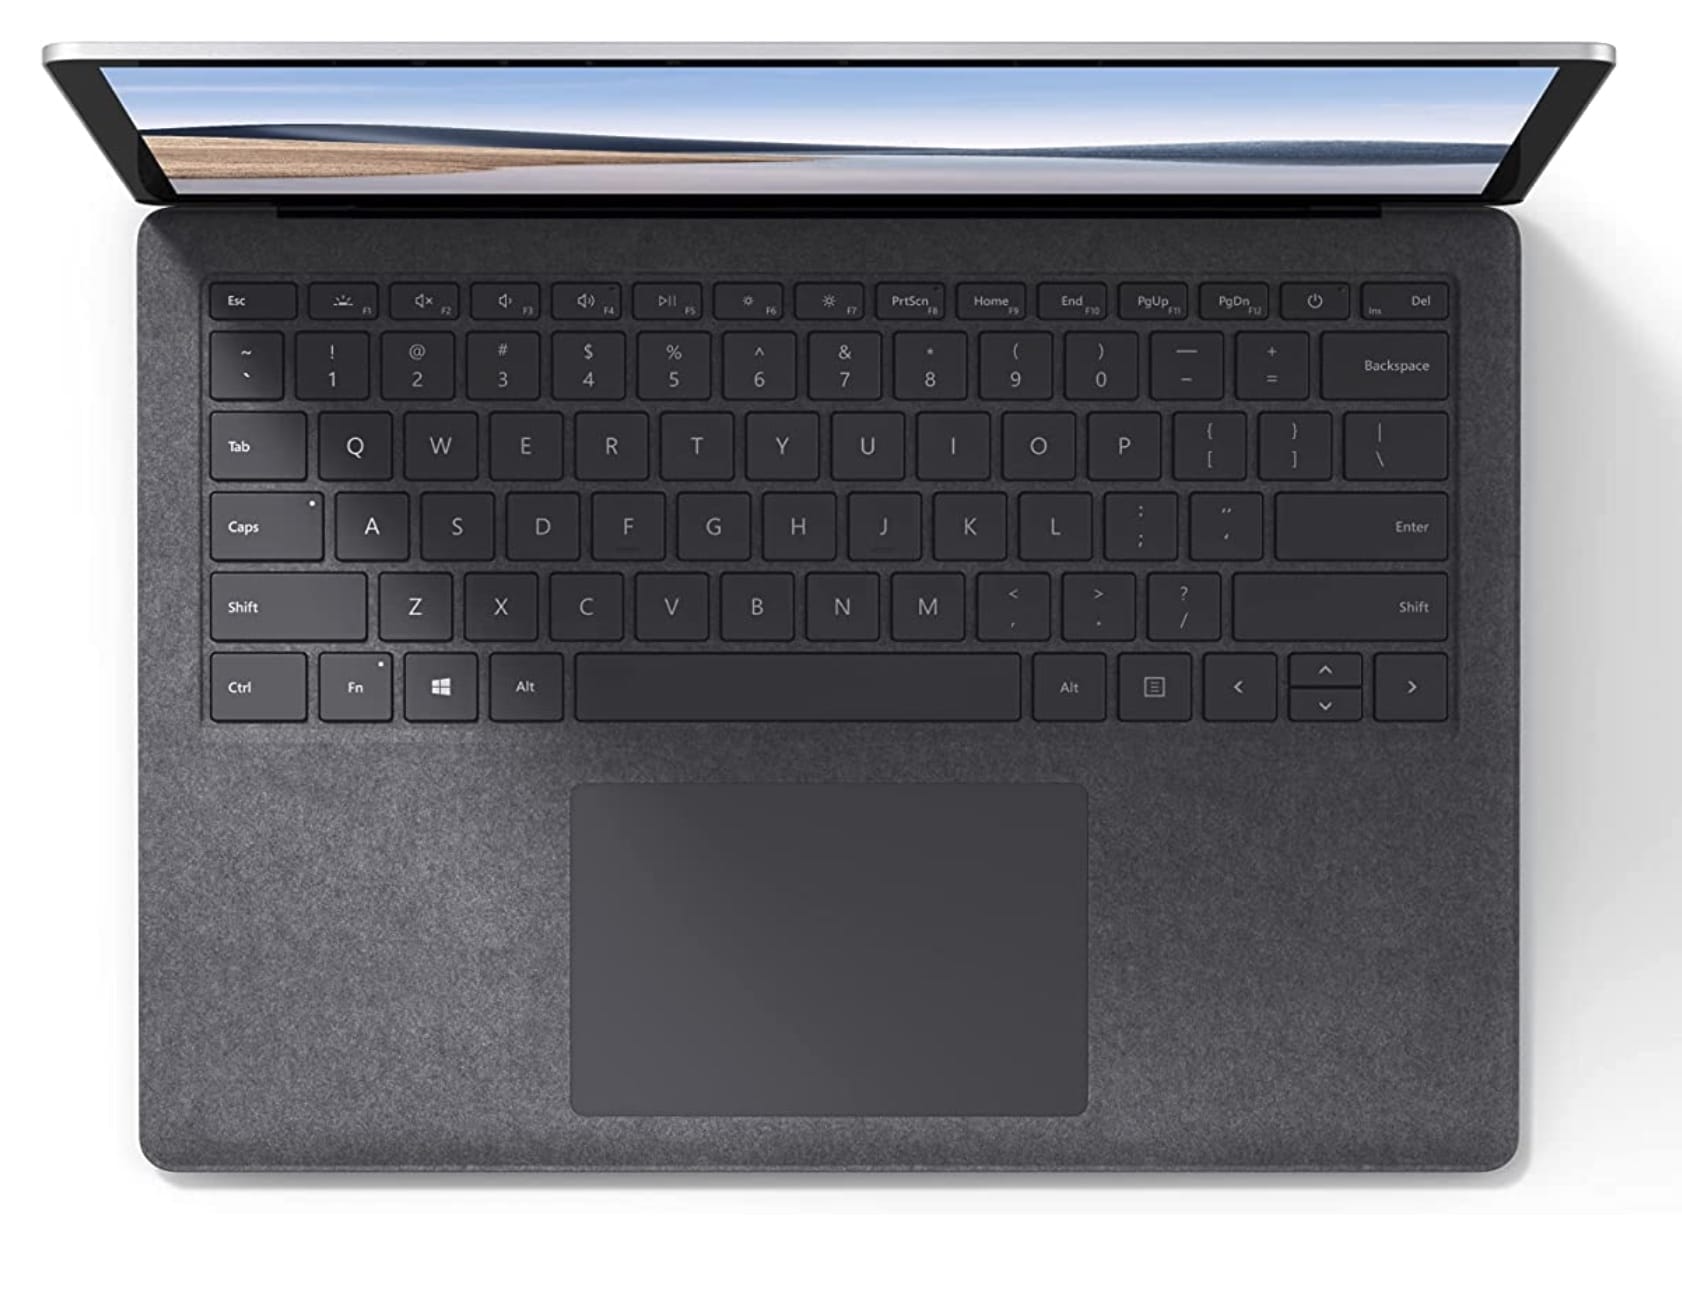 Microsoft Surface Laptop 4 135 Zoll Laptop Platin Amazon.de Computer  Zubehoer 2021 12 07 11 44 51